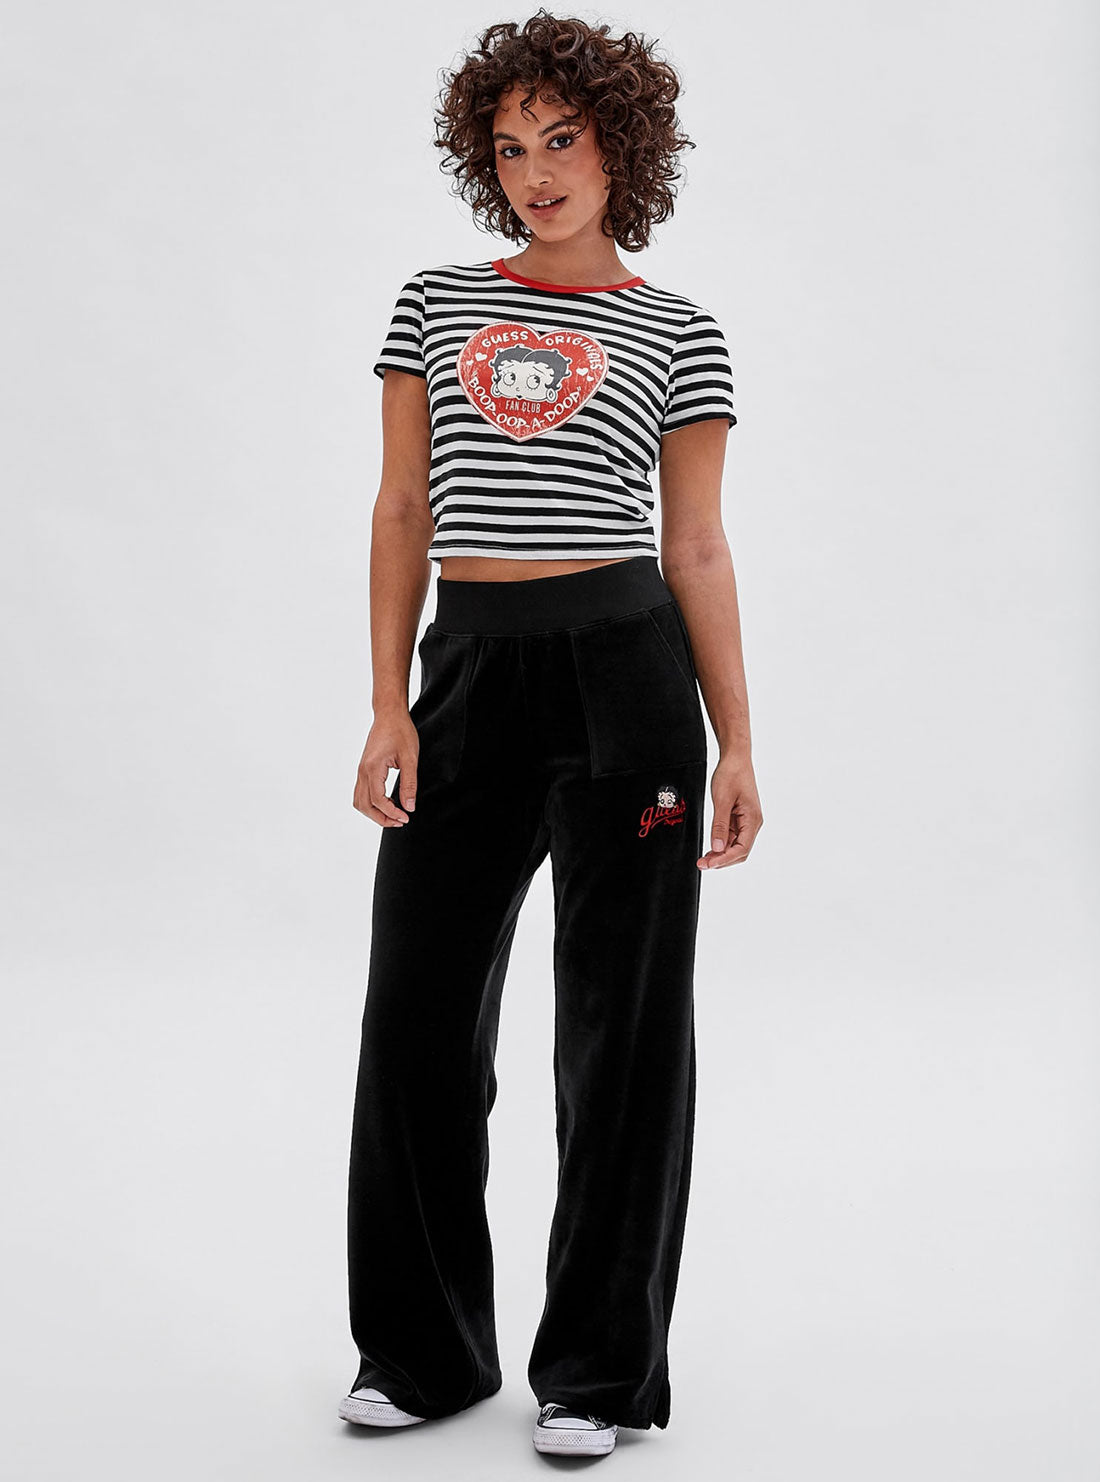 GUESS Women's Guess Originals x Betty Boop Black Striped Baby T-Shirt W2BP36KBA83 Full View